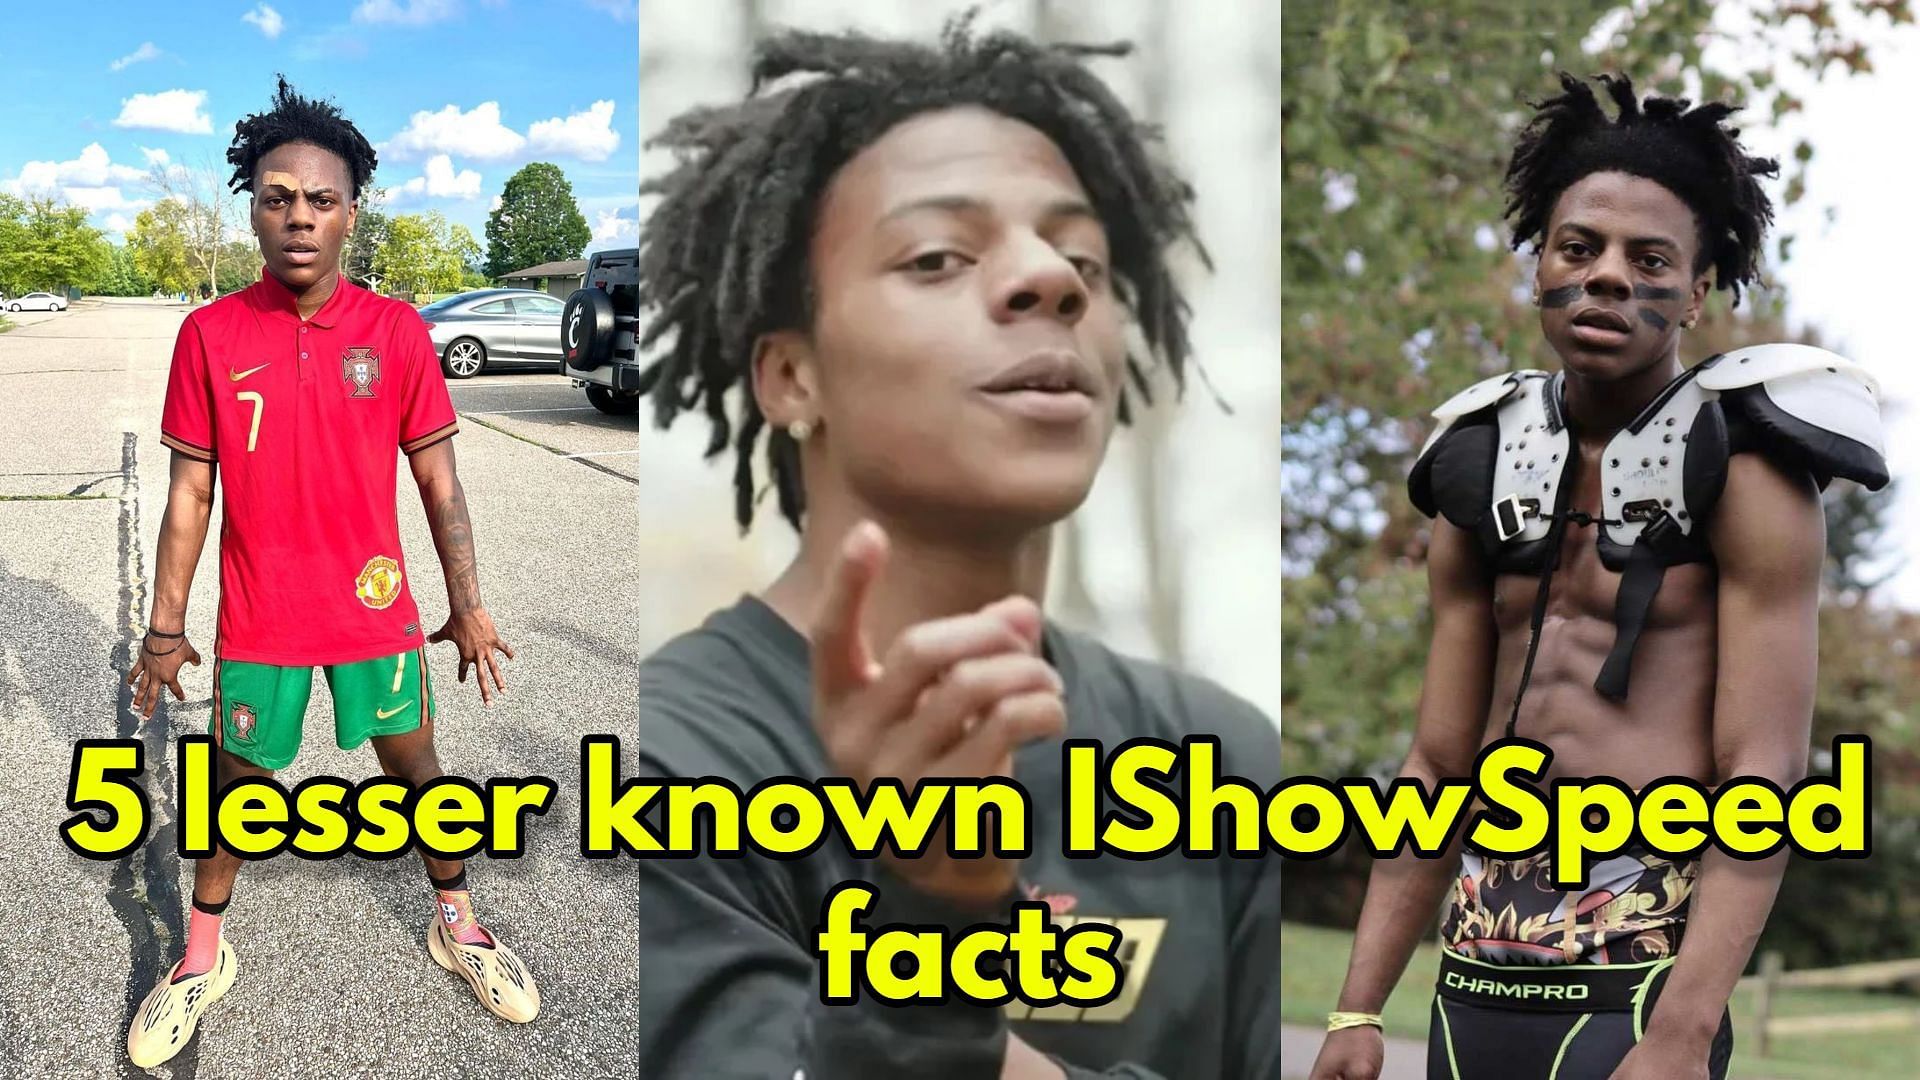 5 lesser known IShowSpeed facts (Image via Sportskeeda)